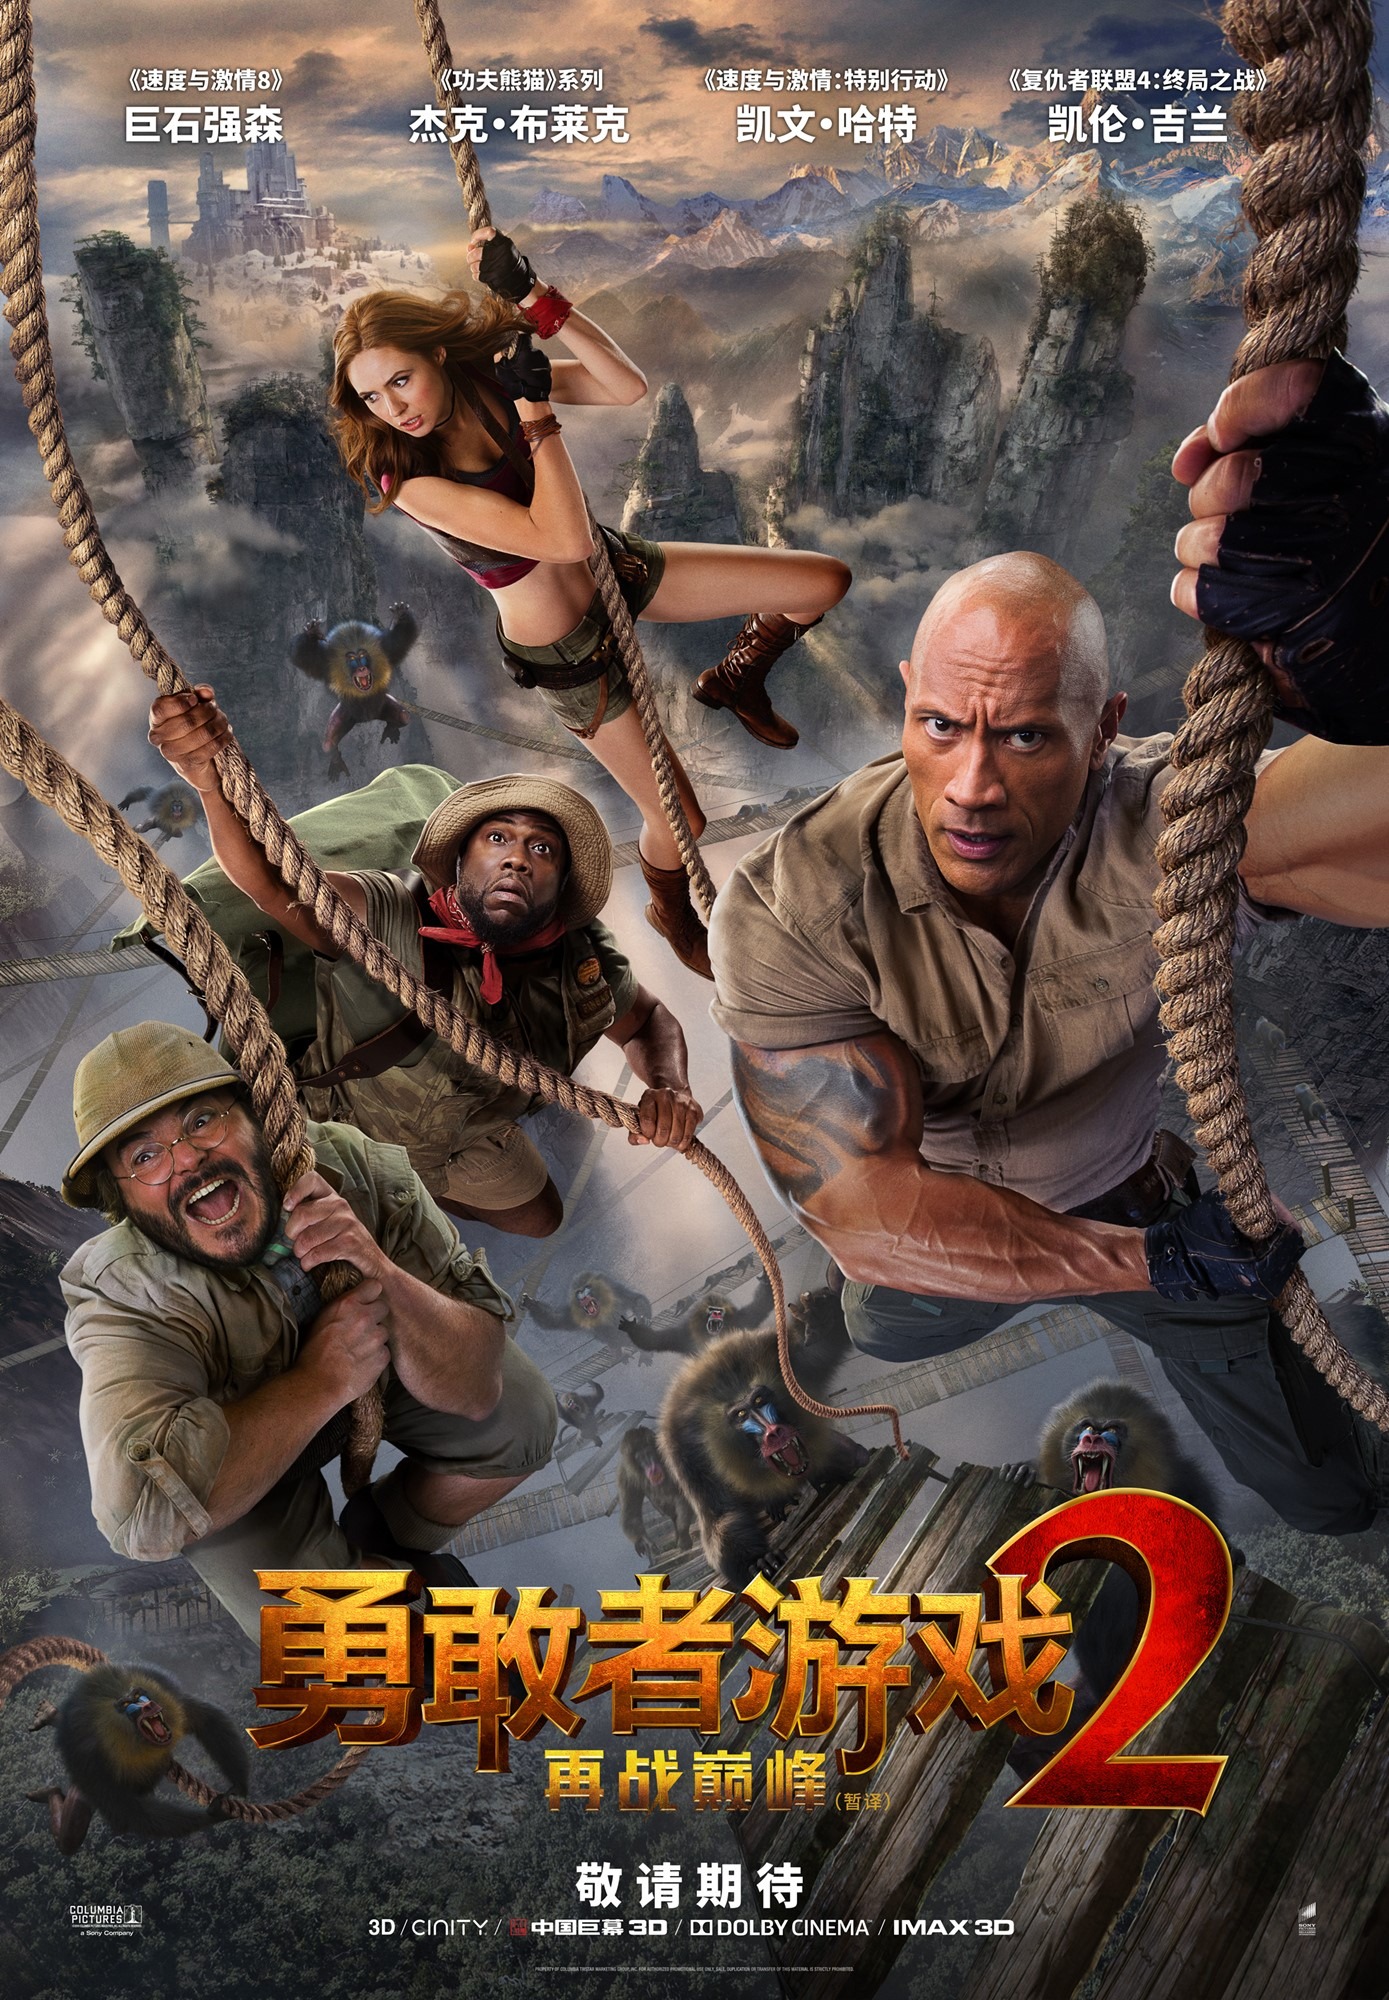 Mega Sized Movie Poster Image for Jumanji: The Next Level (#11 of 24)